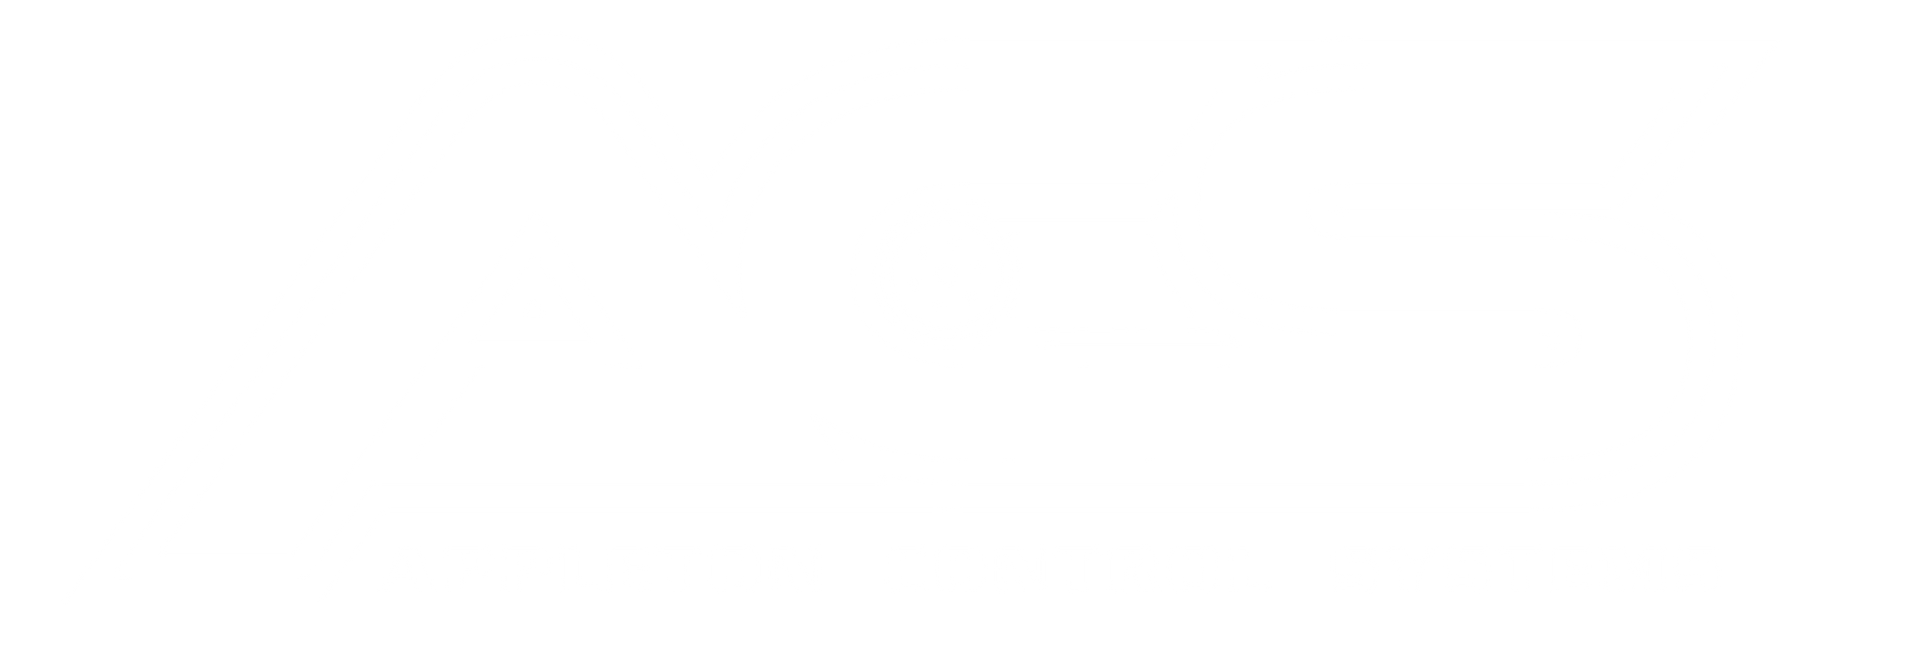 Appleton Control Systems